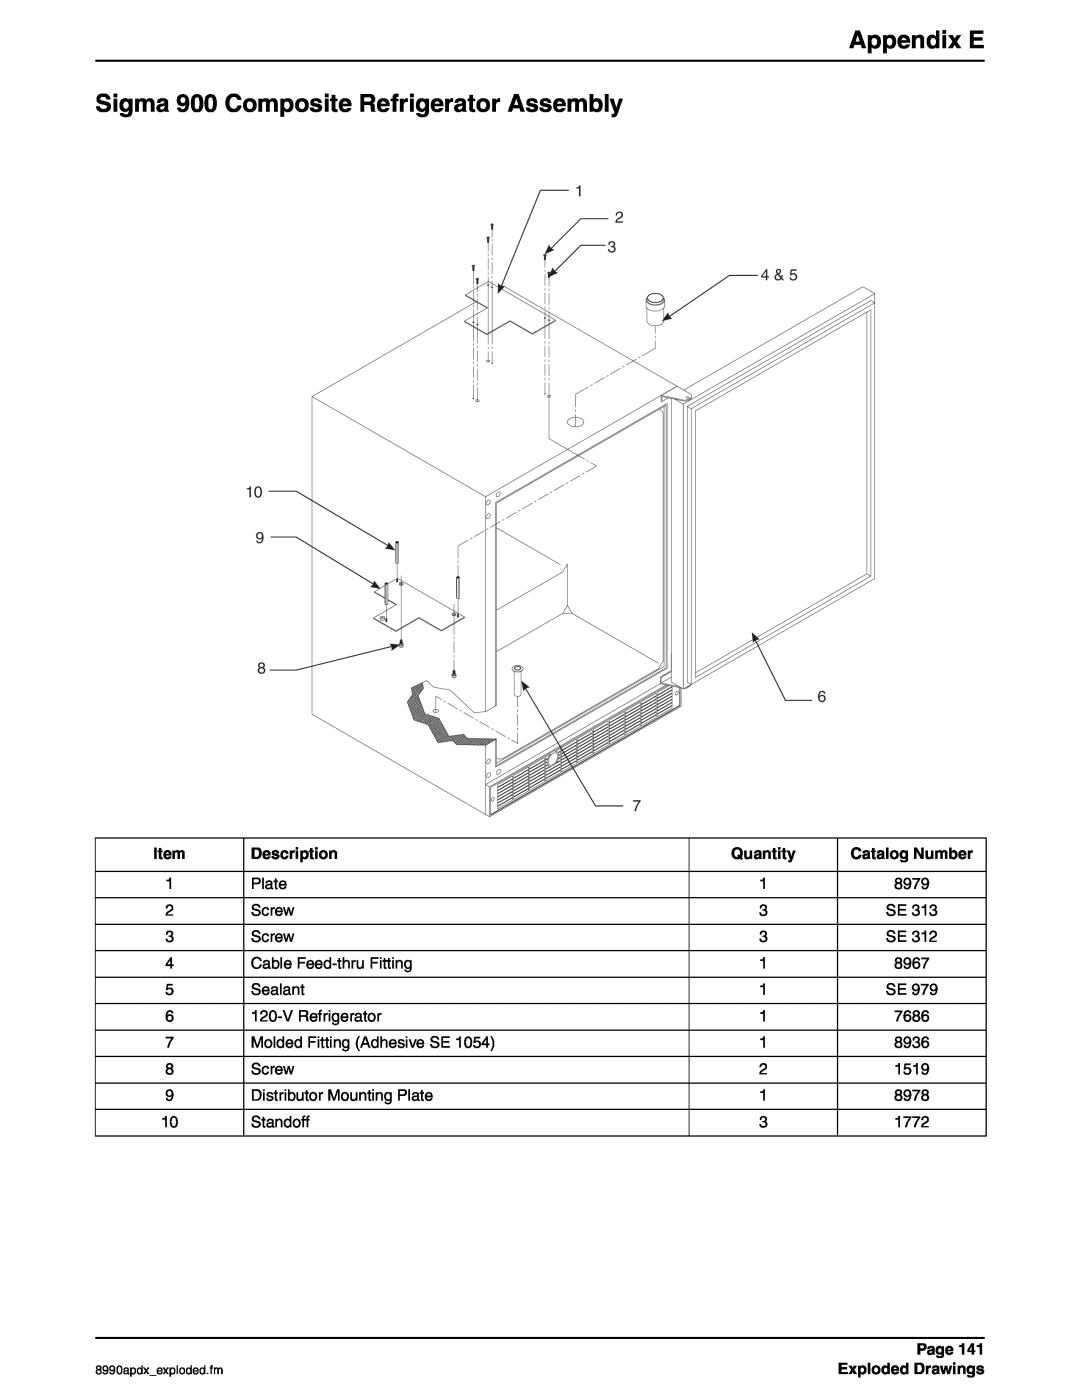 Hach 900 MAX manual Sigma 900 Composite Refrigerator Assembly, Appendix E 